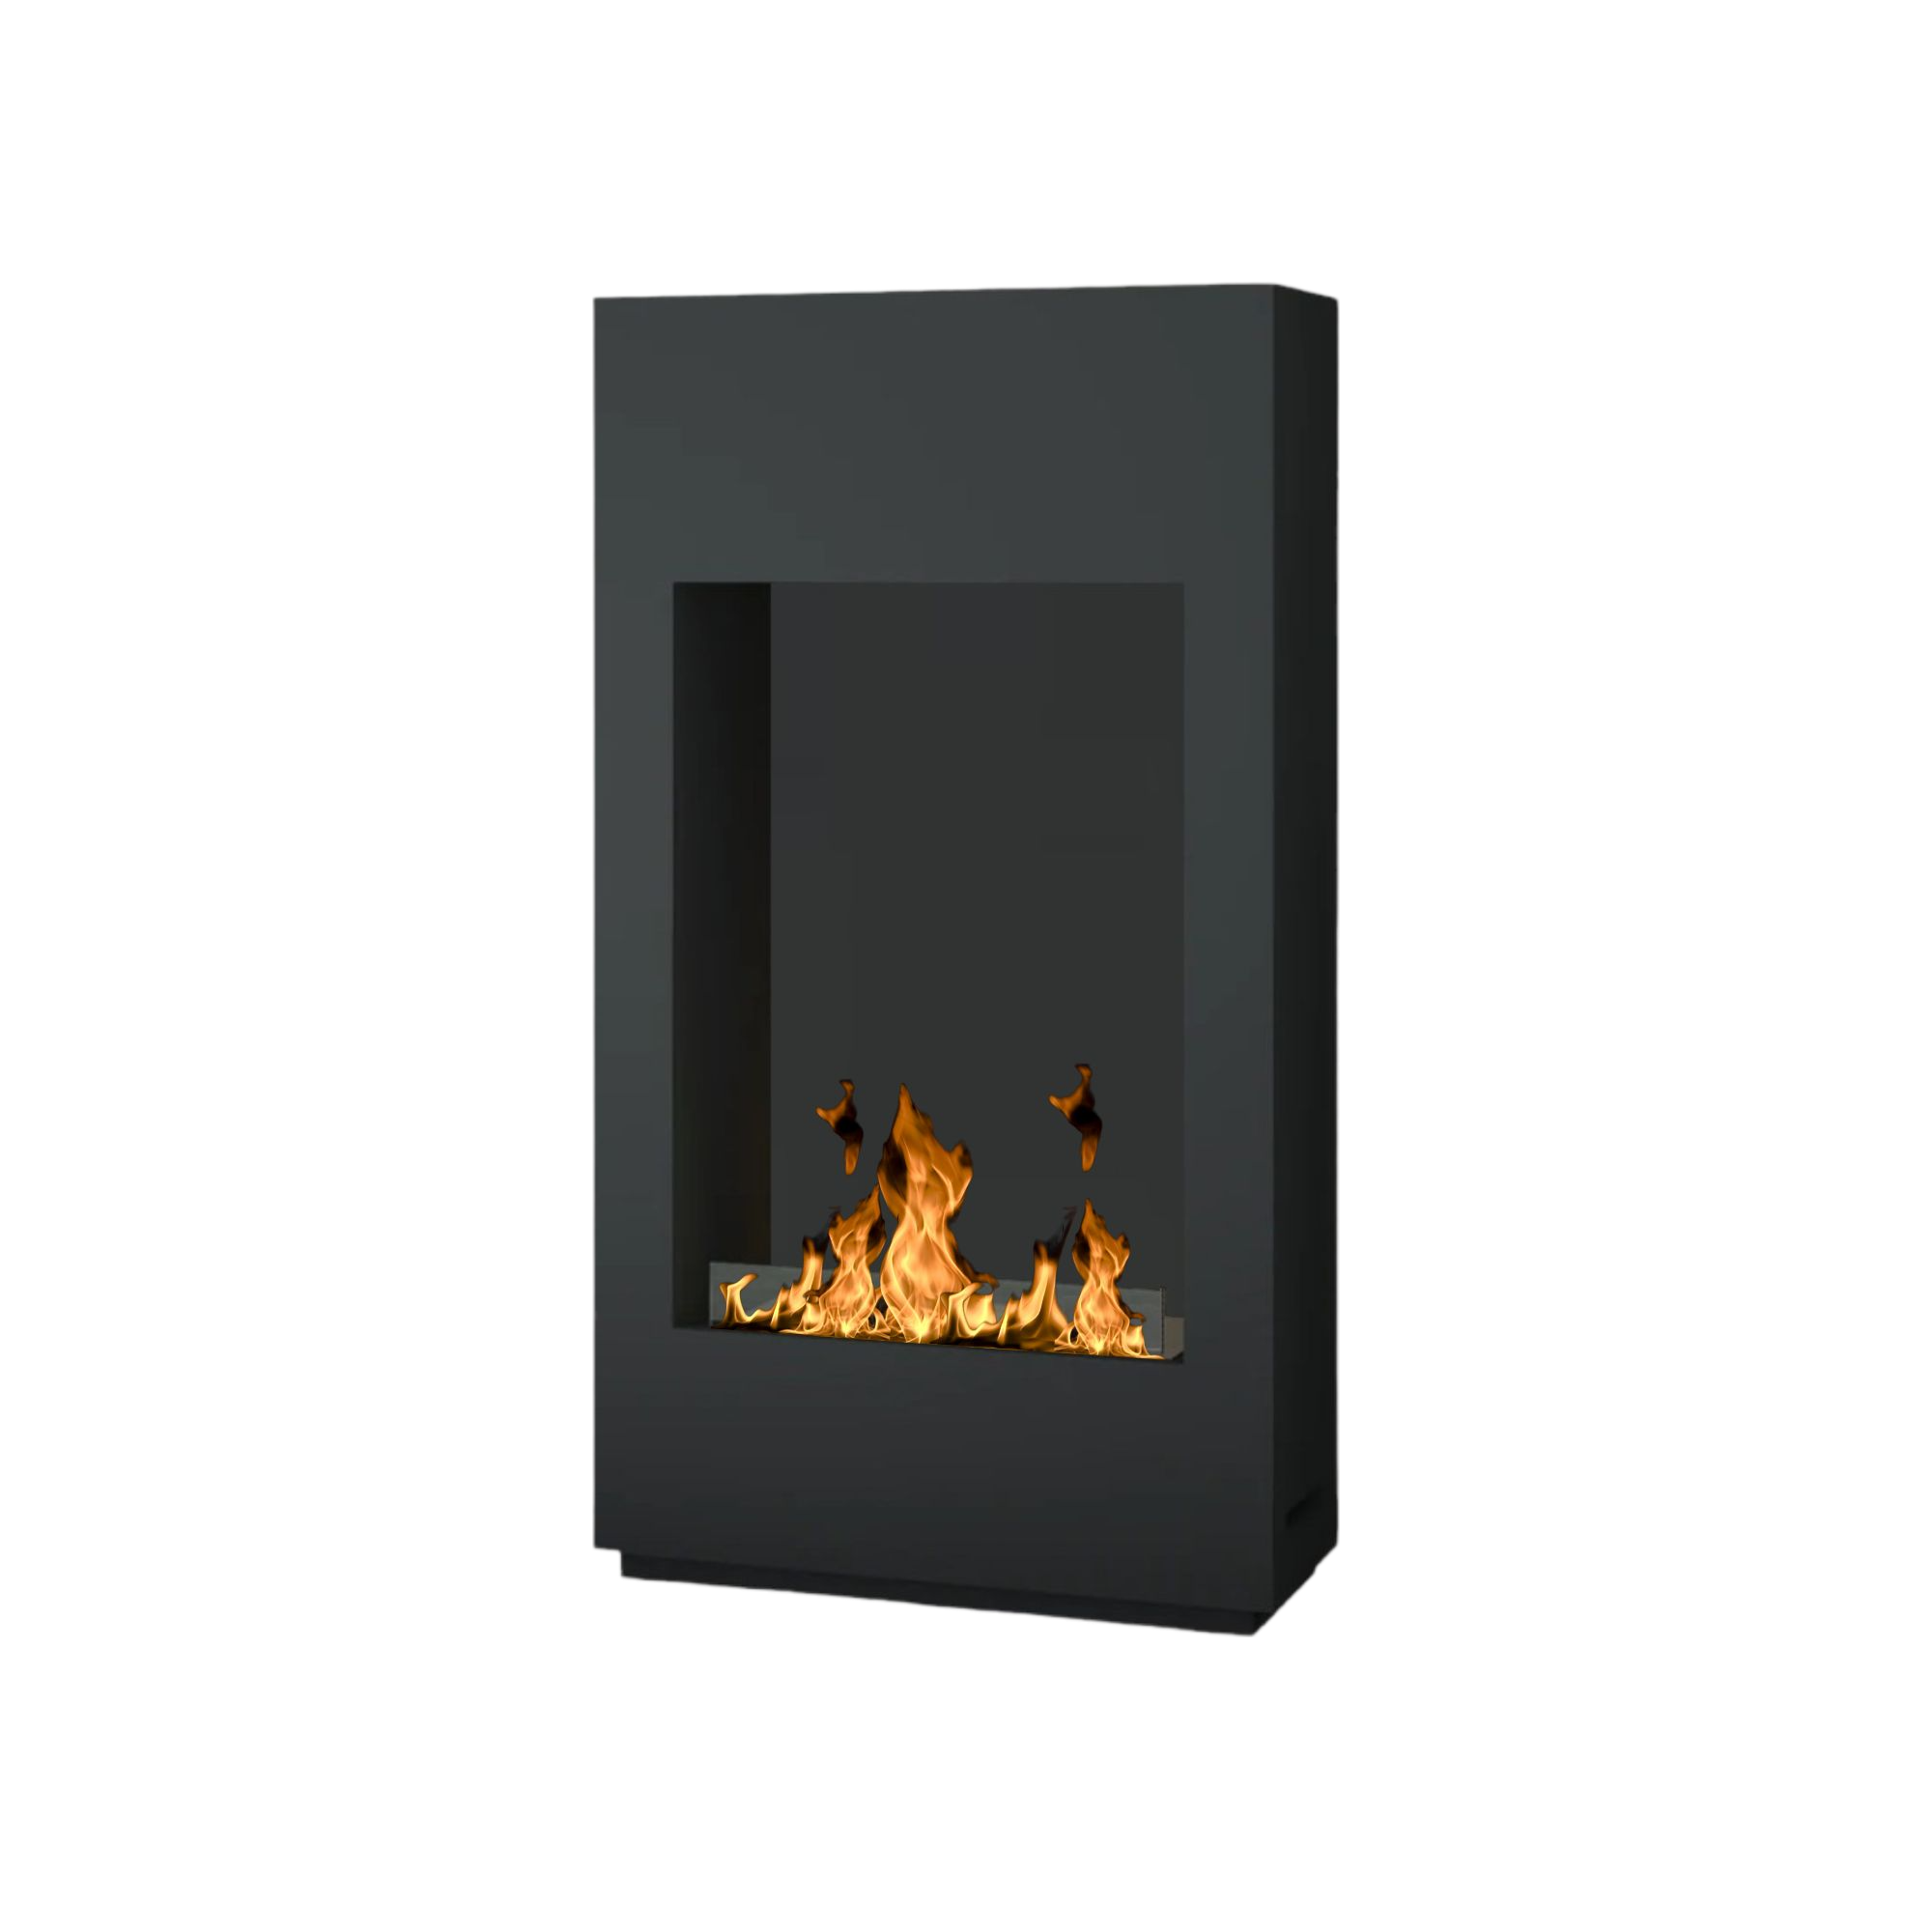 Flame Black Freestanding Bio-Ethanol Stove Fireplace